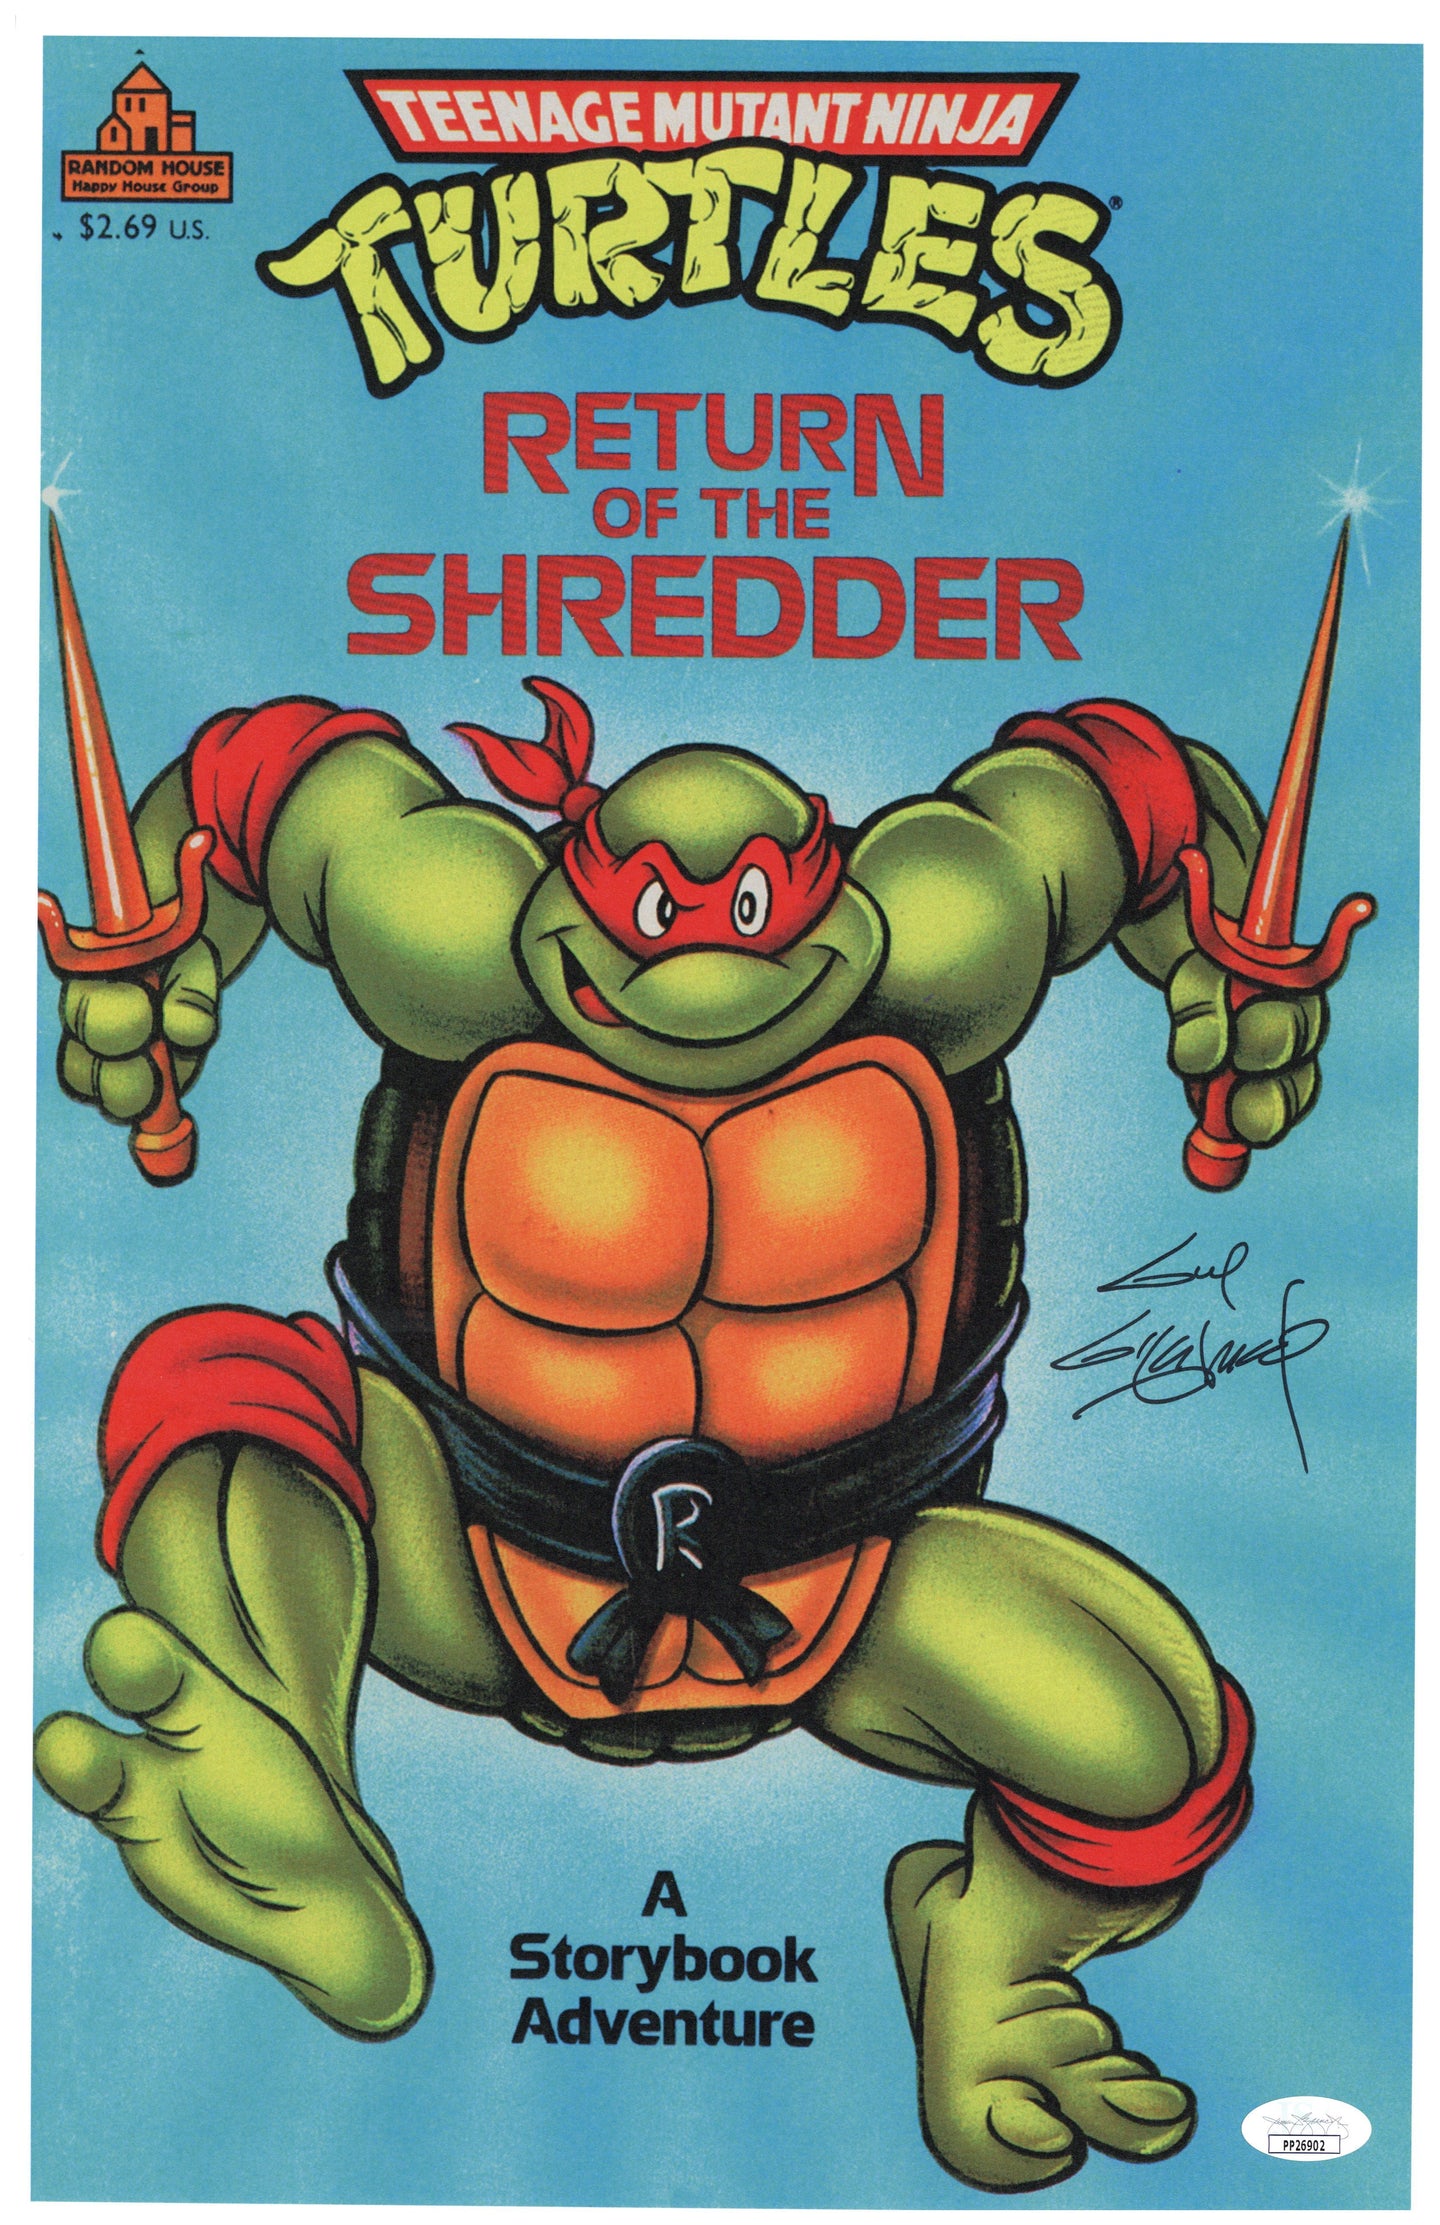 Shredder TMNT 2003 - Ninja Turtles - Posters and Art Prints